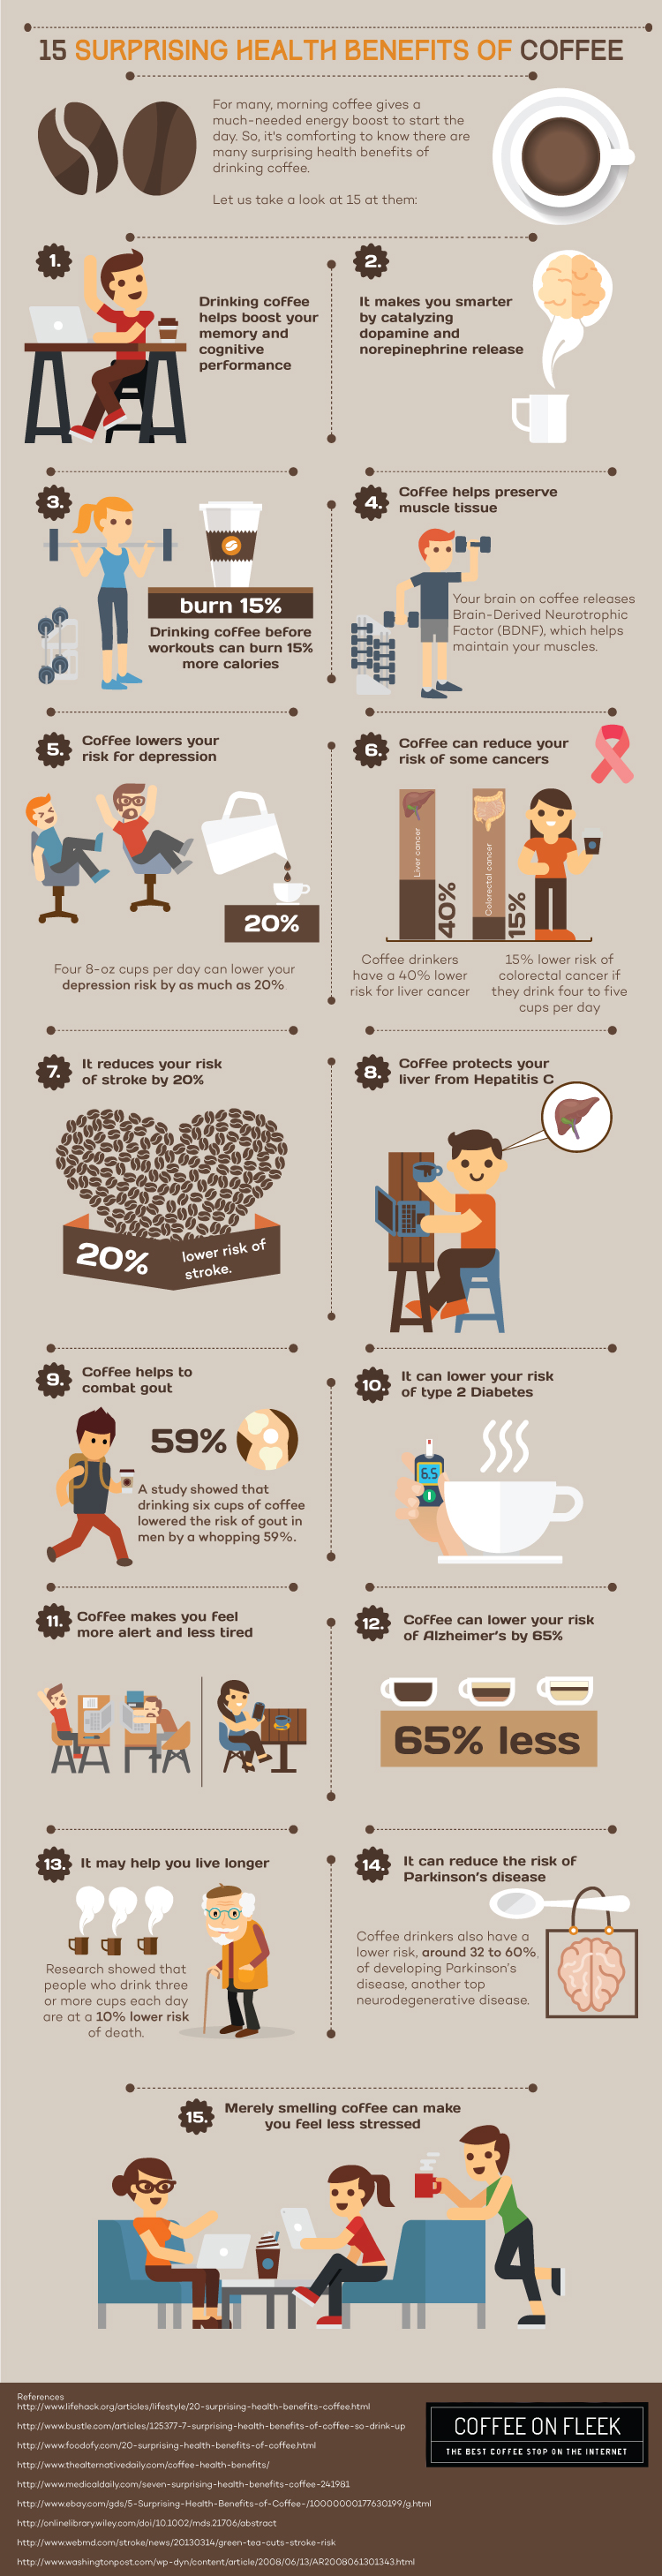 15 surprising health benefits of coffee